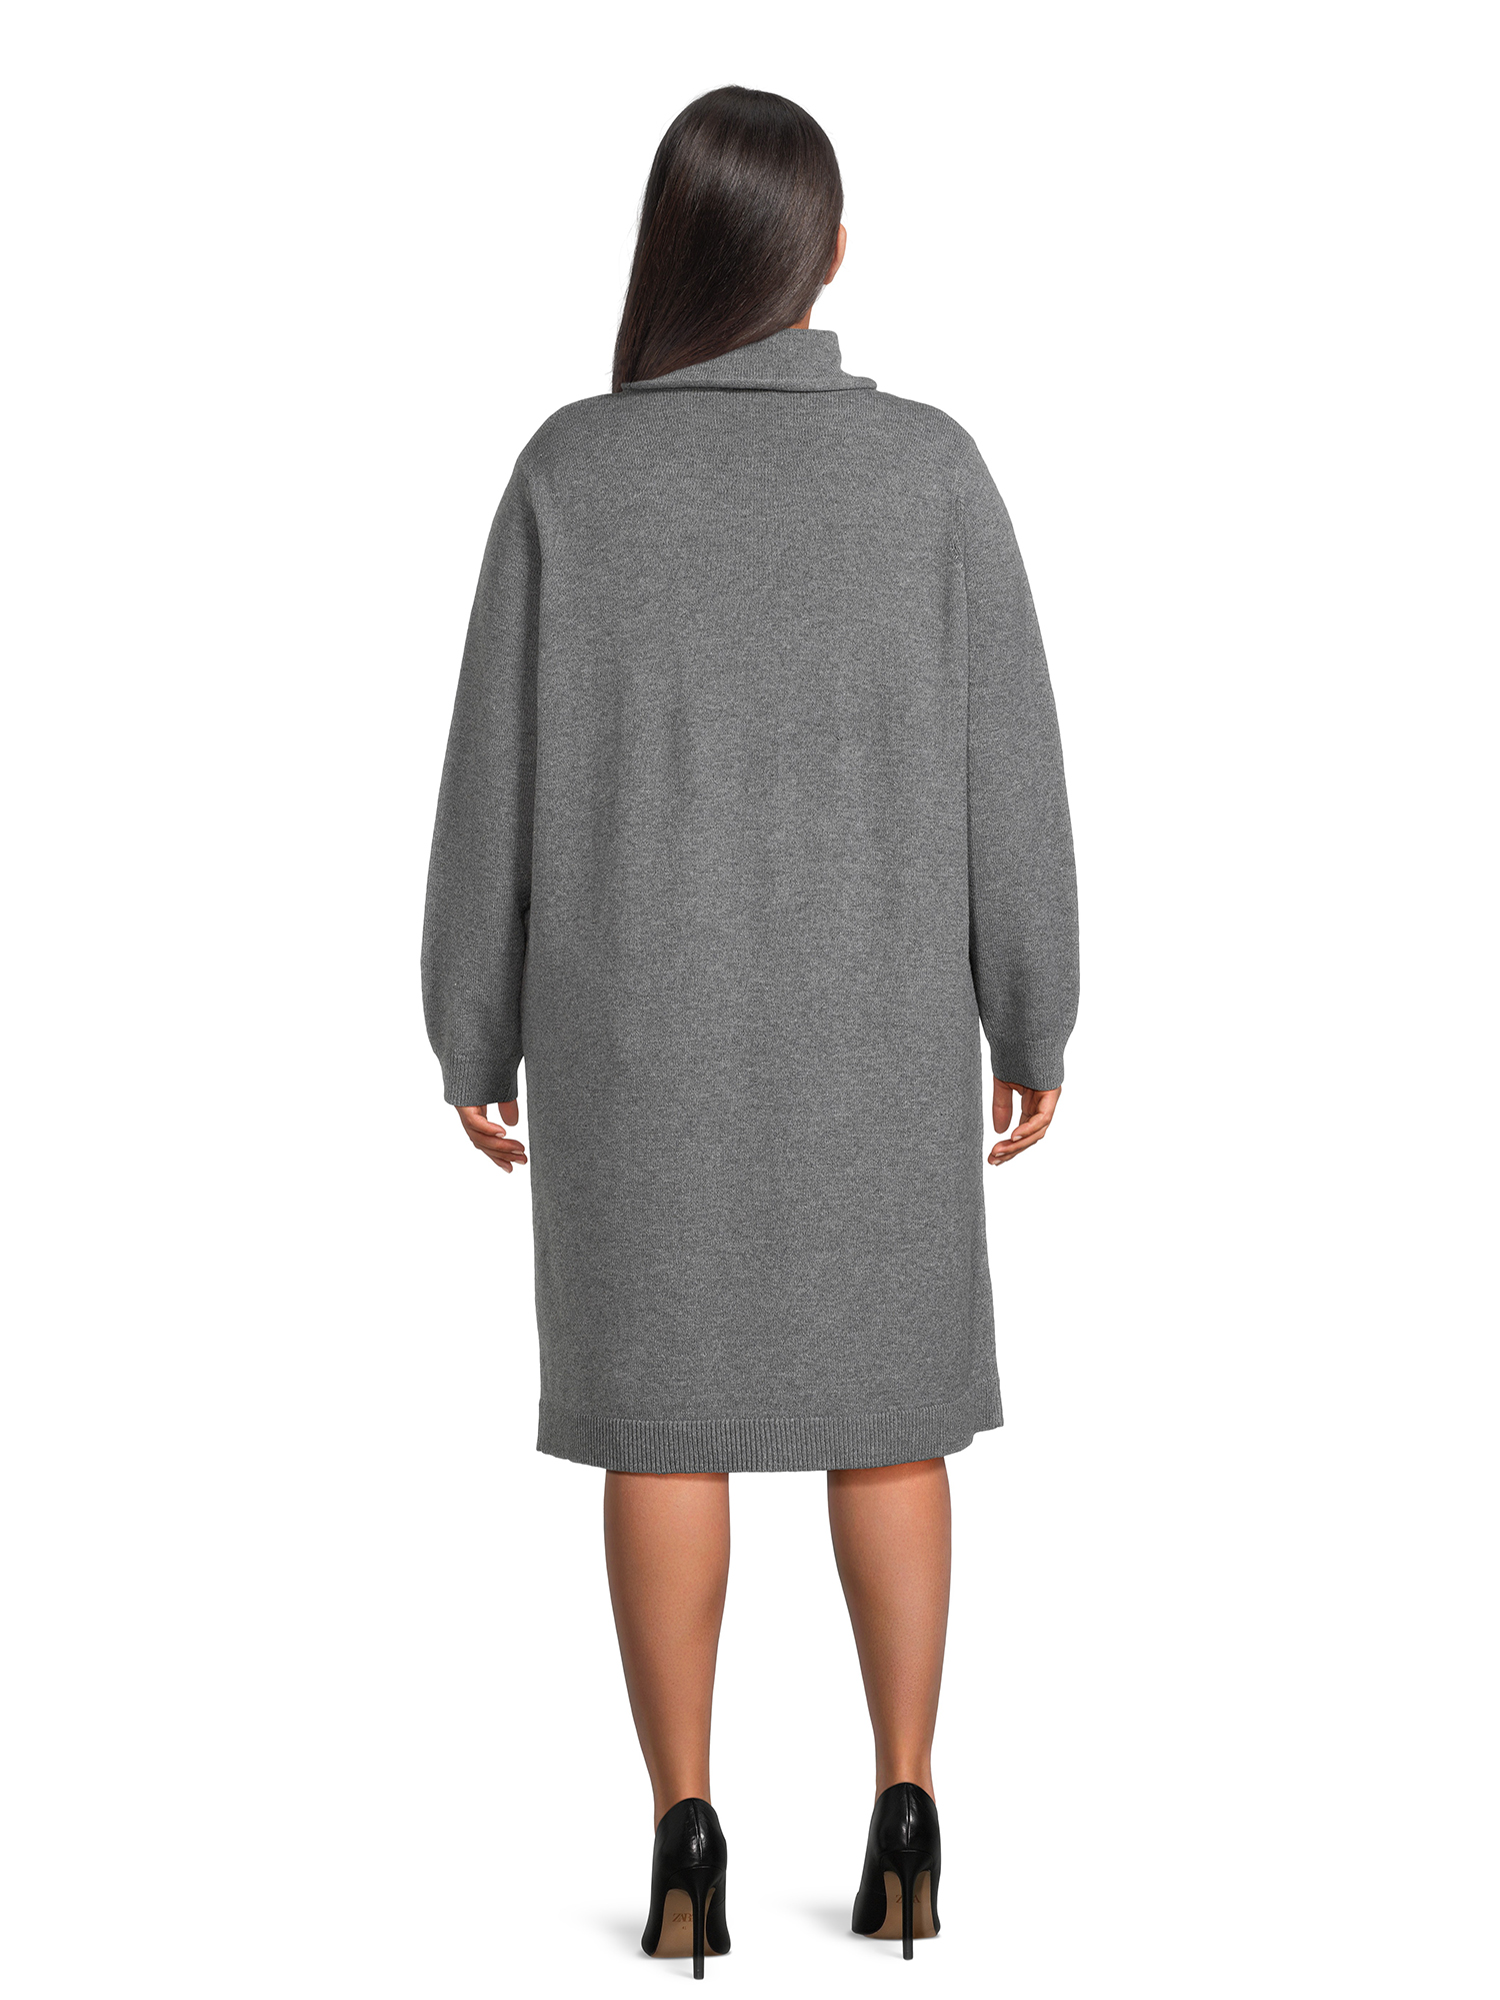 Terra & Sky Women's Plus Size Turtleneck Tunic Length Sweater Dress - image 3 of 5